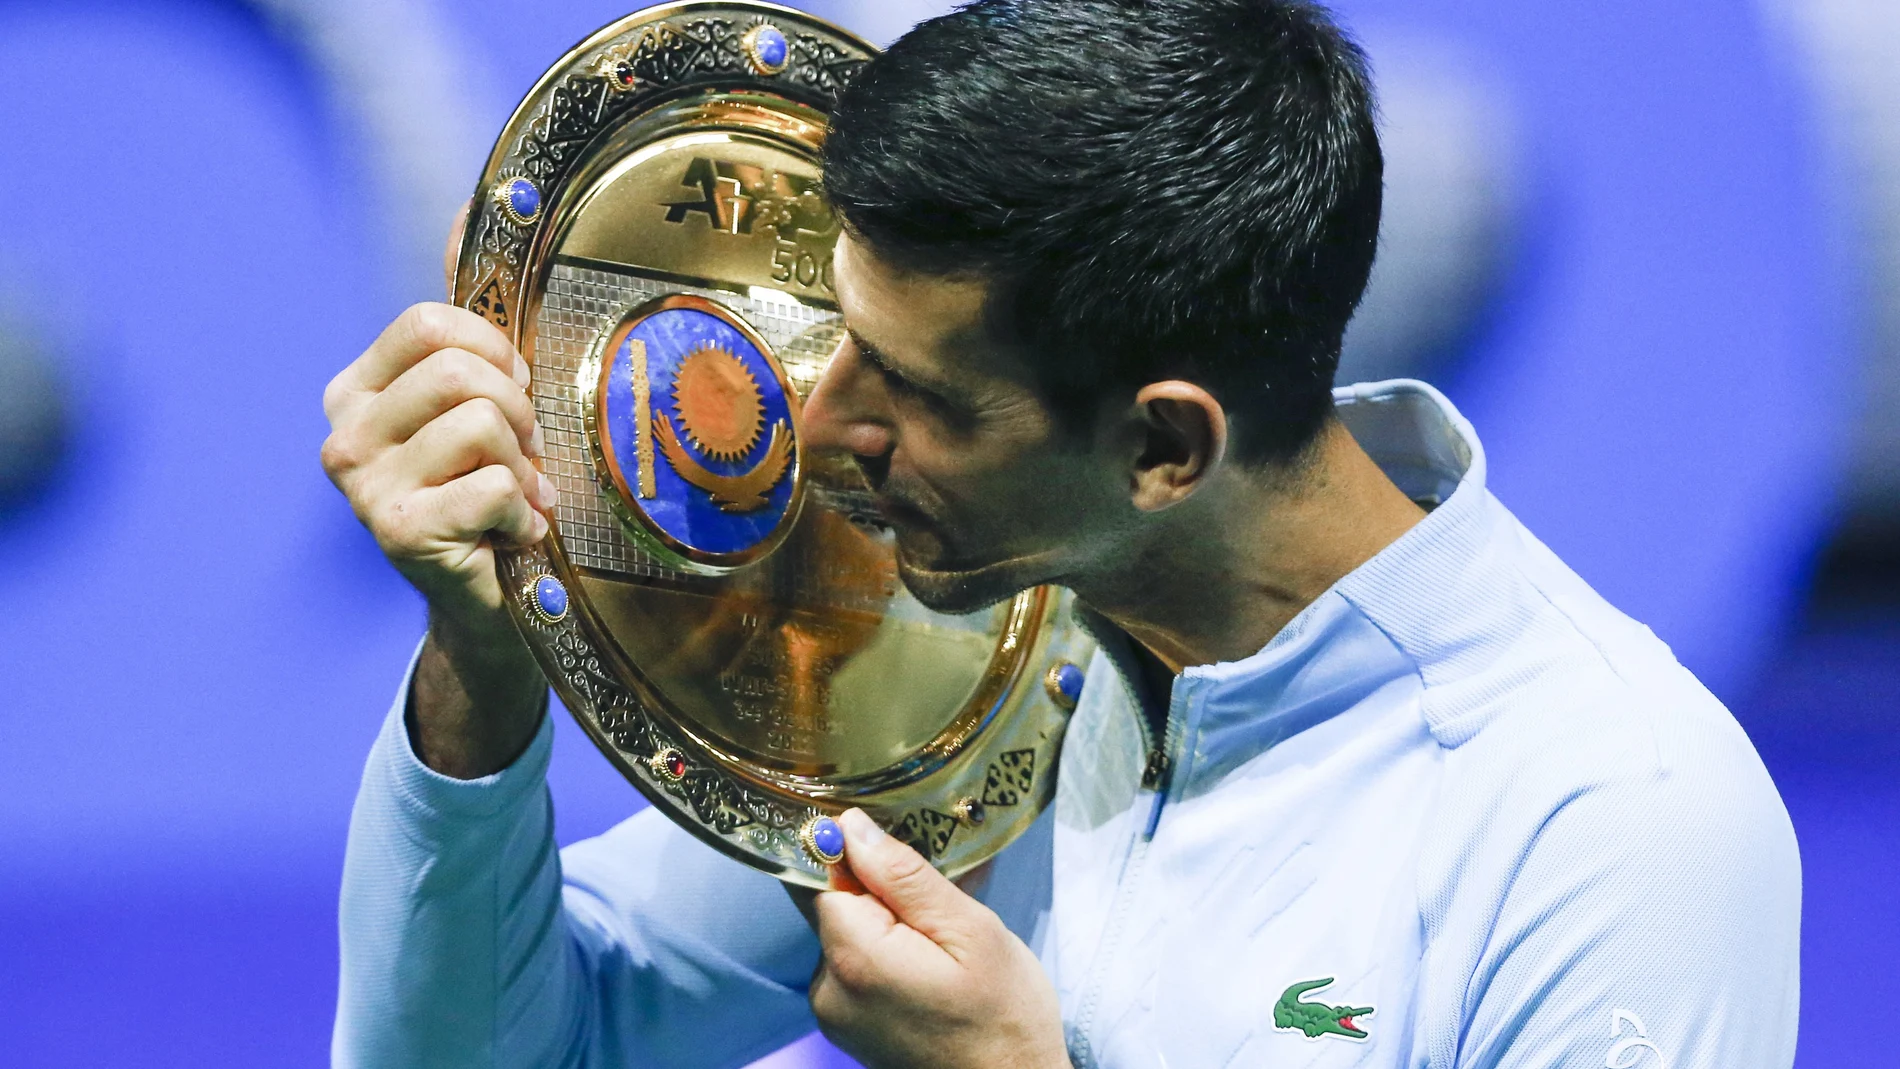 Serbia's Novak Djokovic poses with the trophy after winning the final tennis match of the ATP 500 Astana Open tennis tournament against Stefanos Tsitsipas of Greece in Astana, Kazakhstan, Sunday, Oct. 9, 2022. (AP Photo/Stas Filippov)